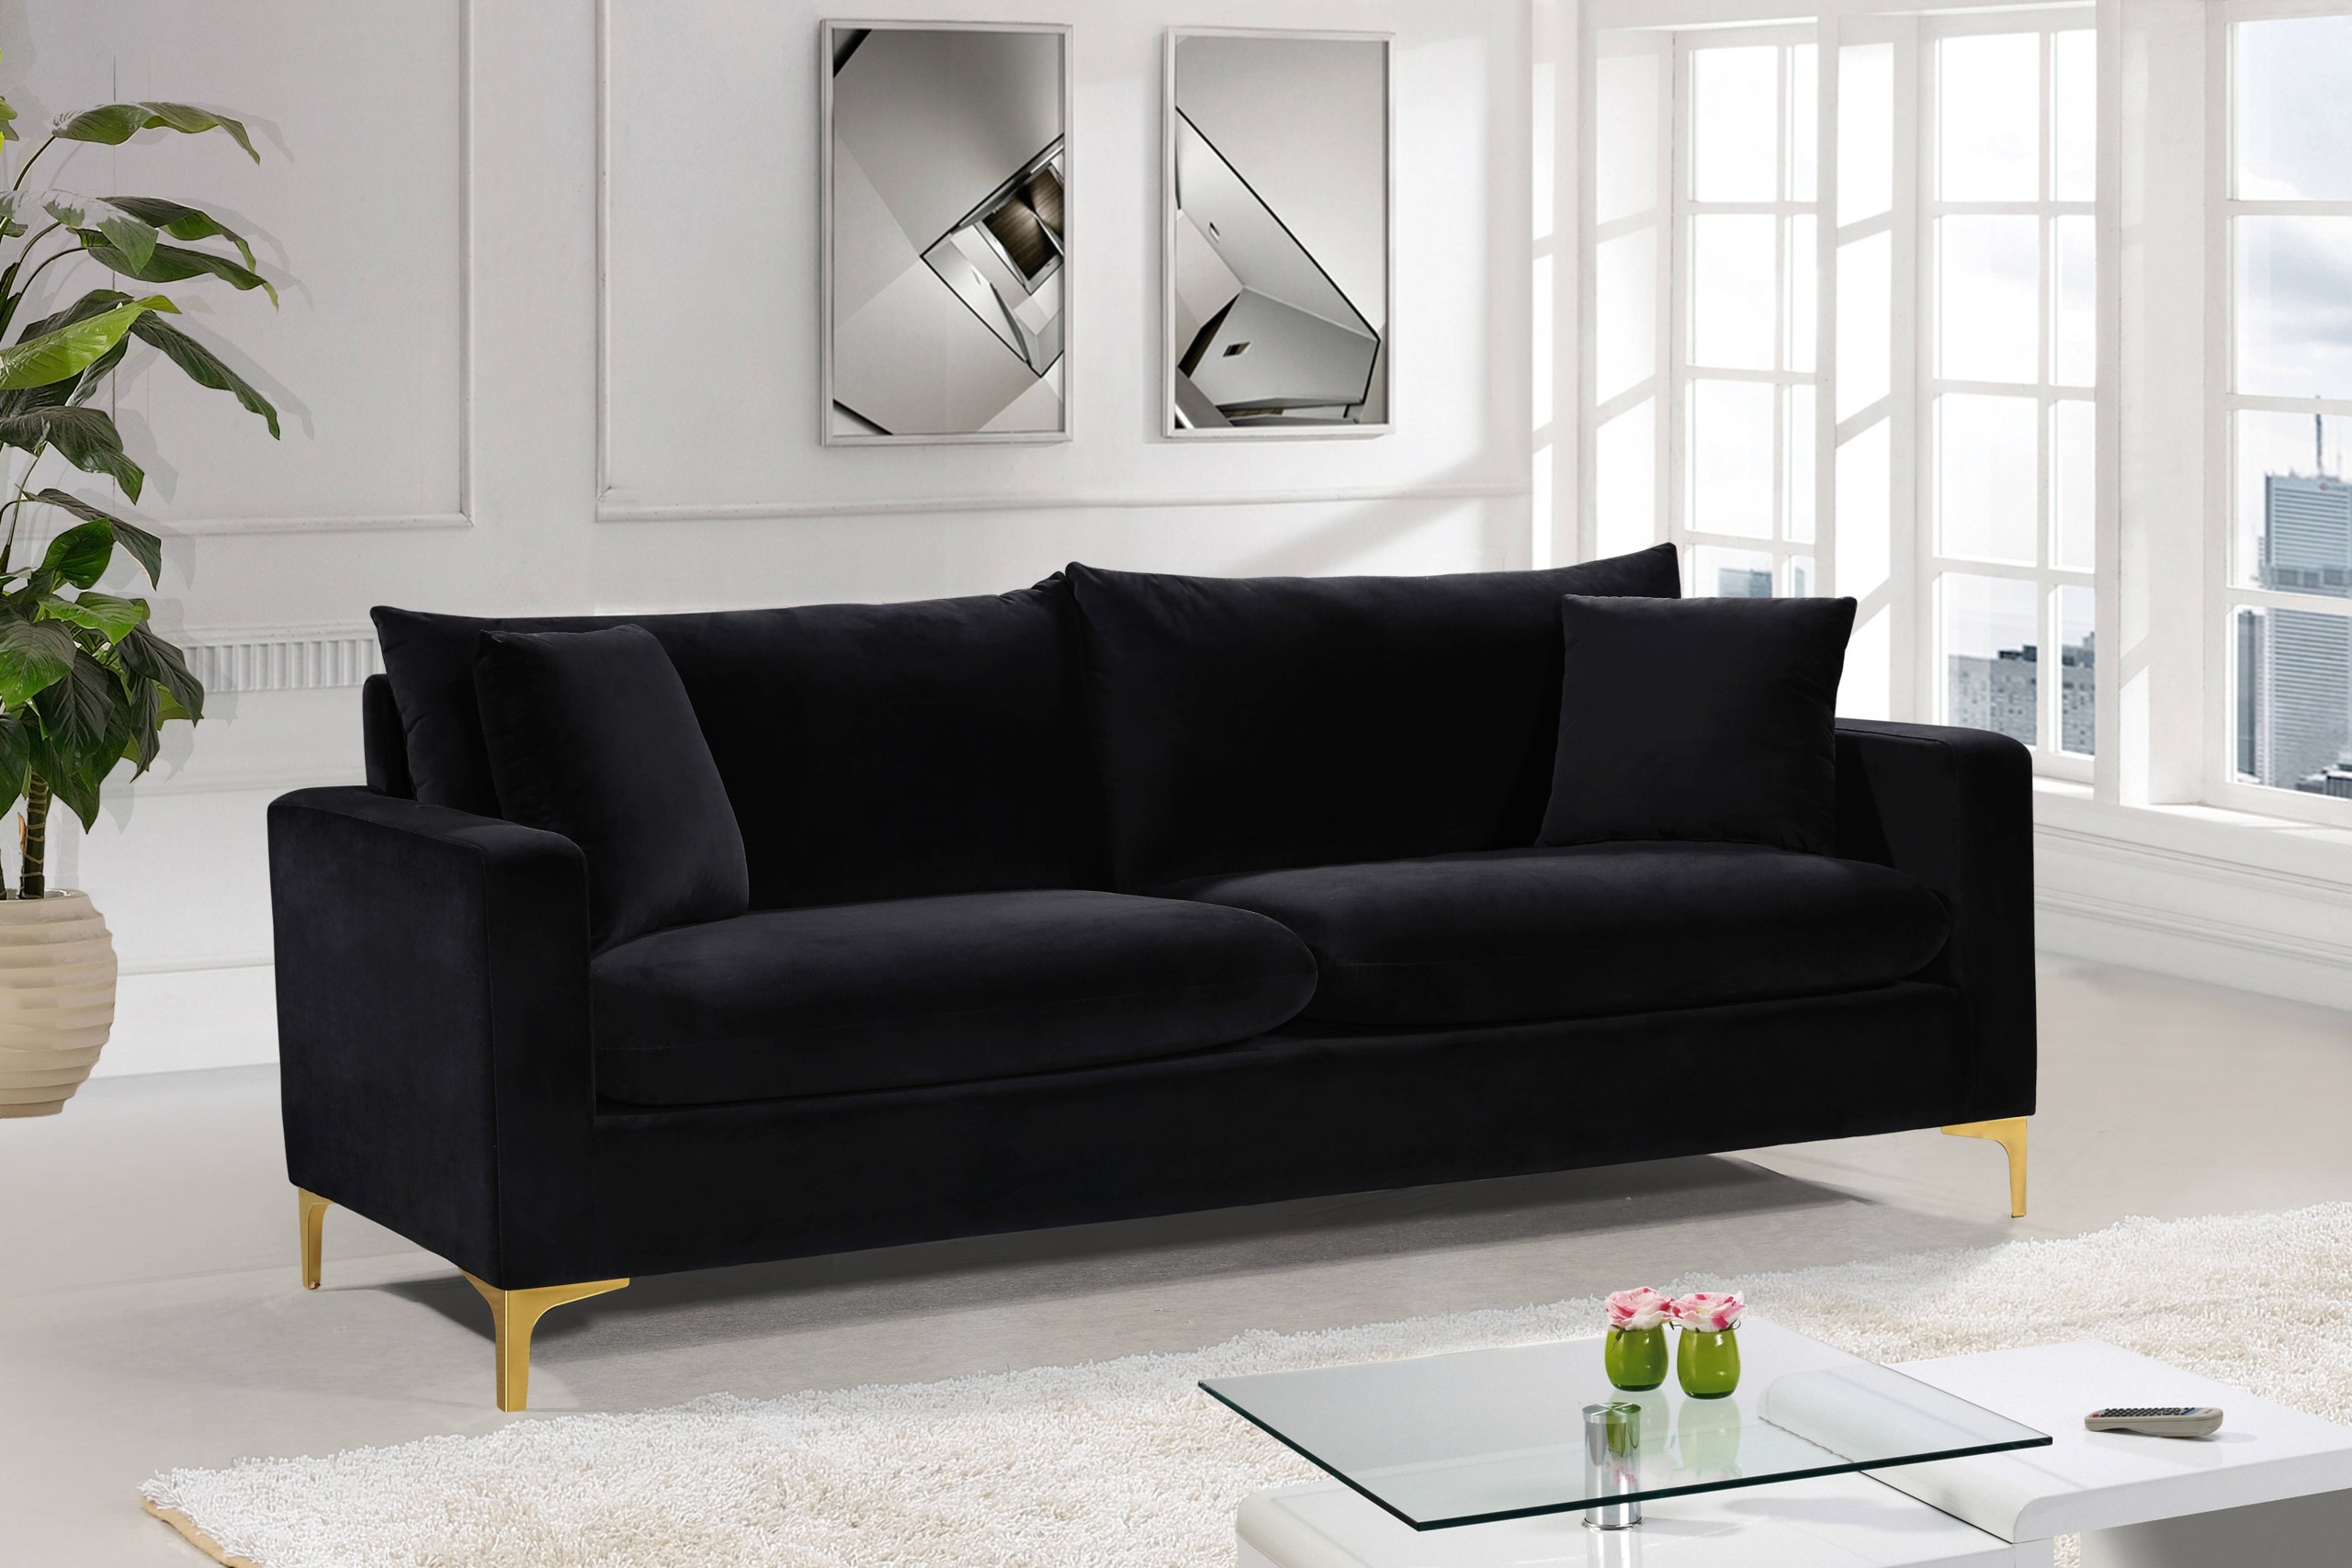 Meridian furniture naomi black velvet sofa the classy home